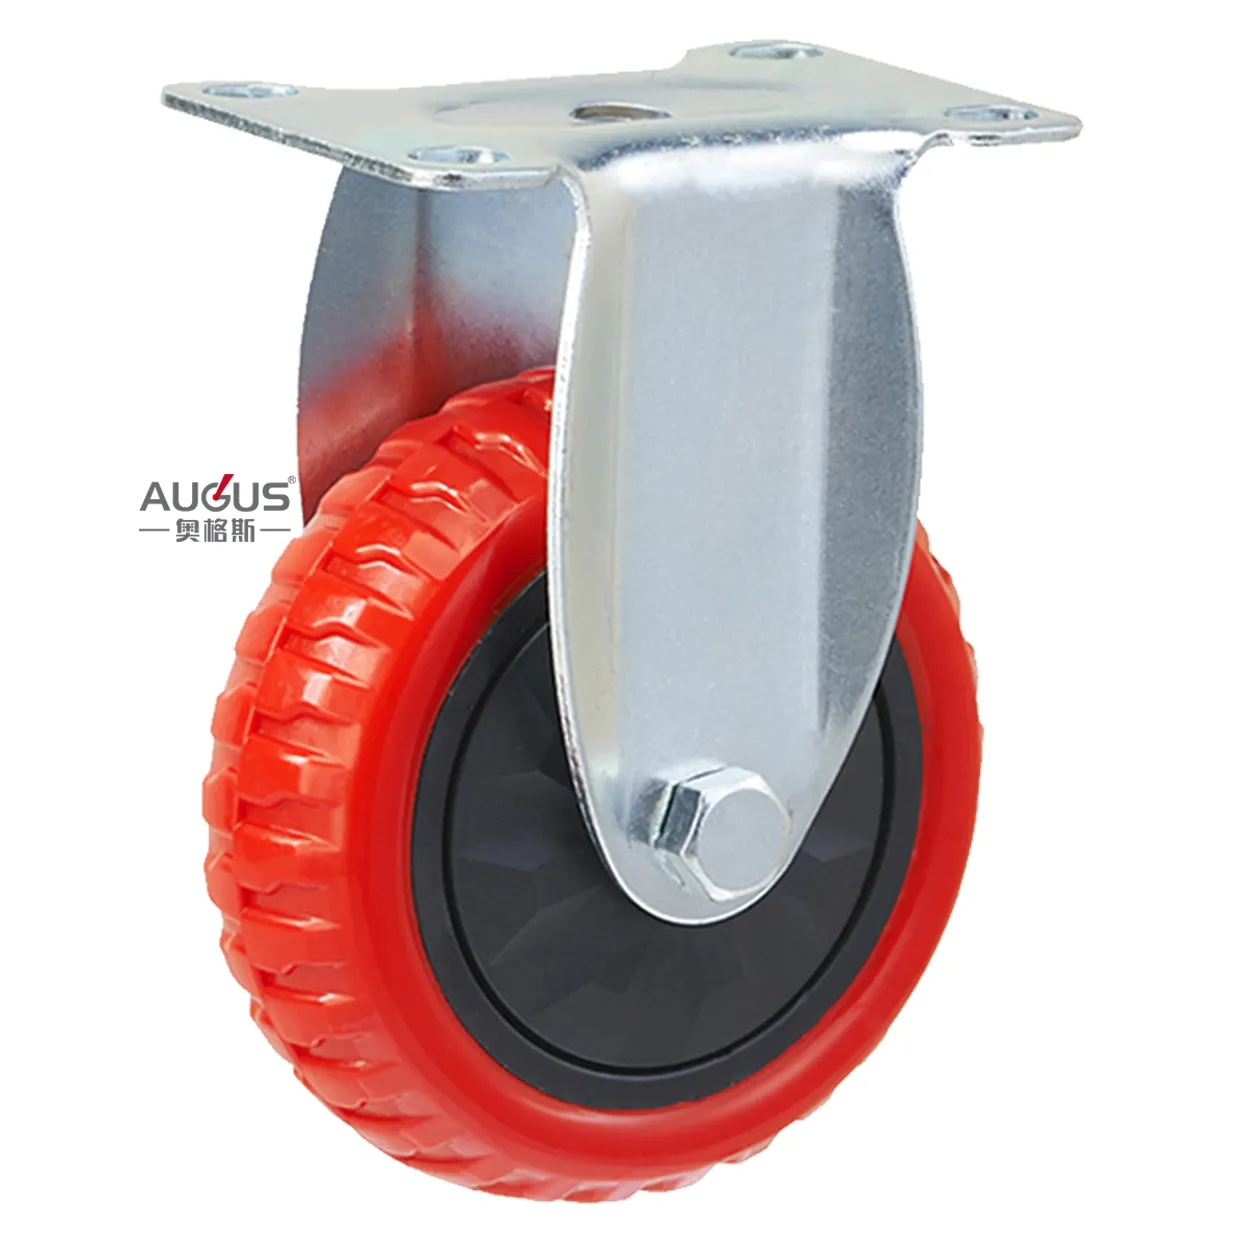 customized any size polyvinyl chloride or polyurethane wheels 3'' trolley caster wheels plastic castors